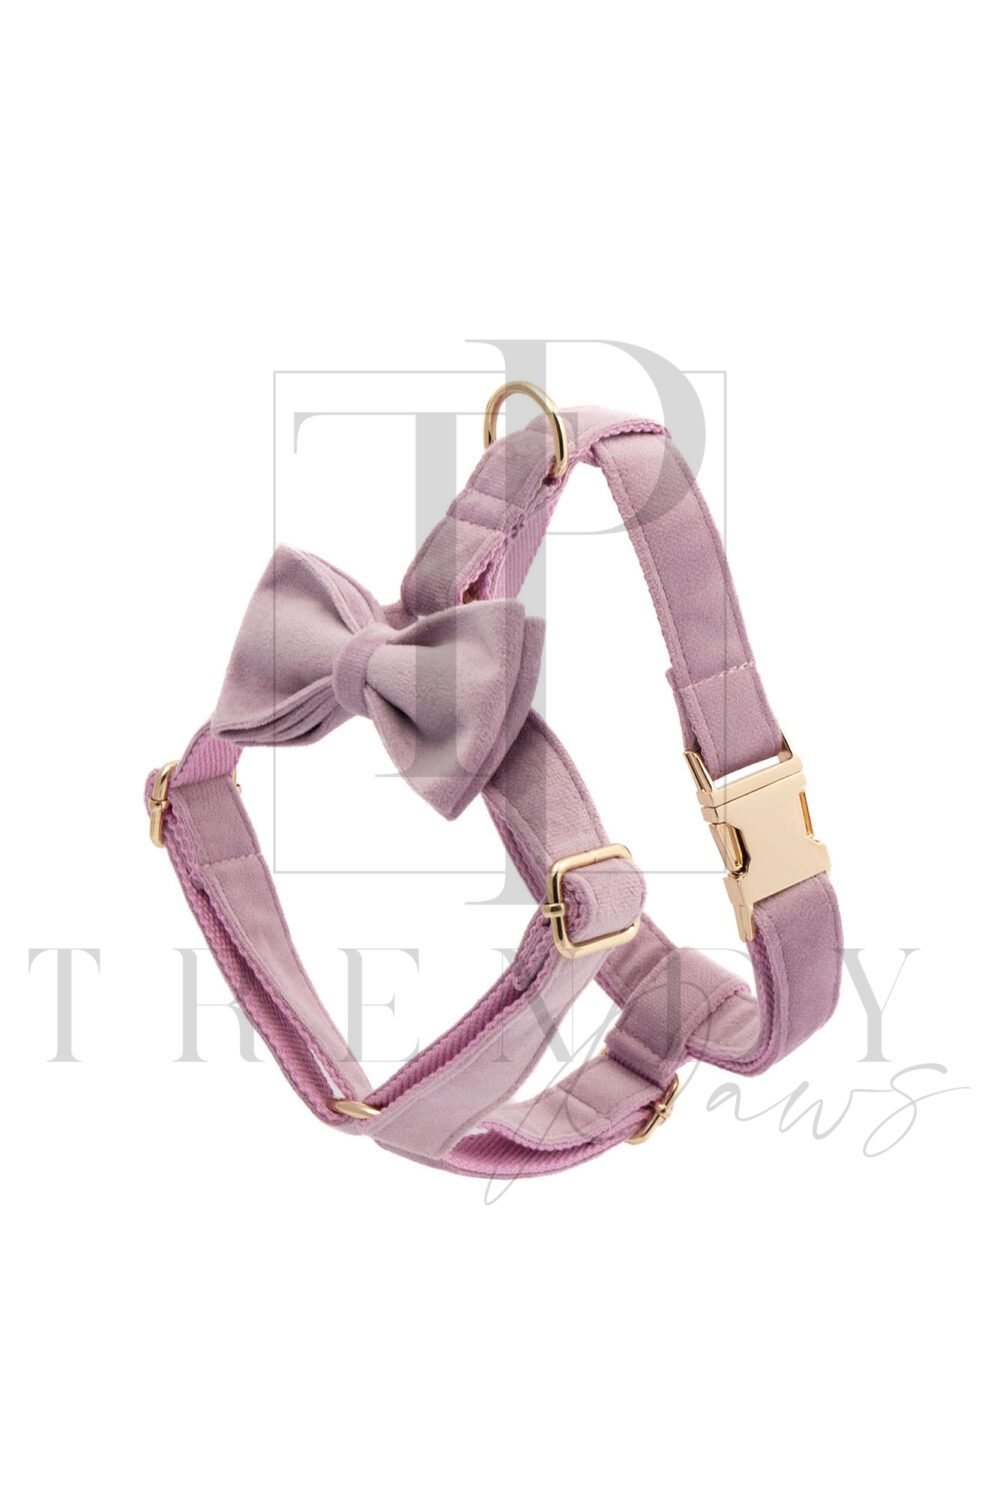 Lavender velvet soft dog harnesses harness bow ties